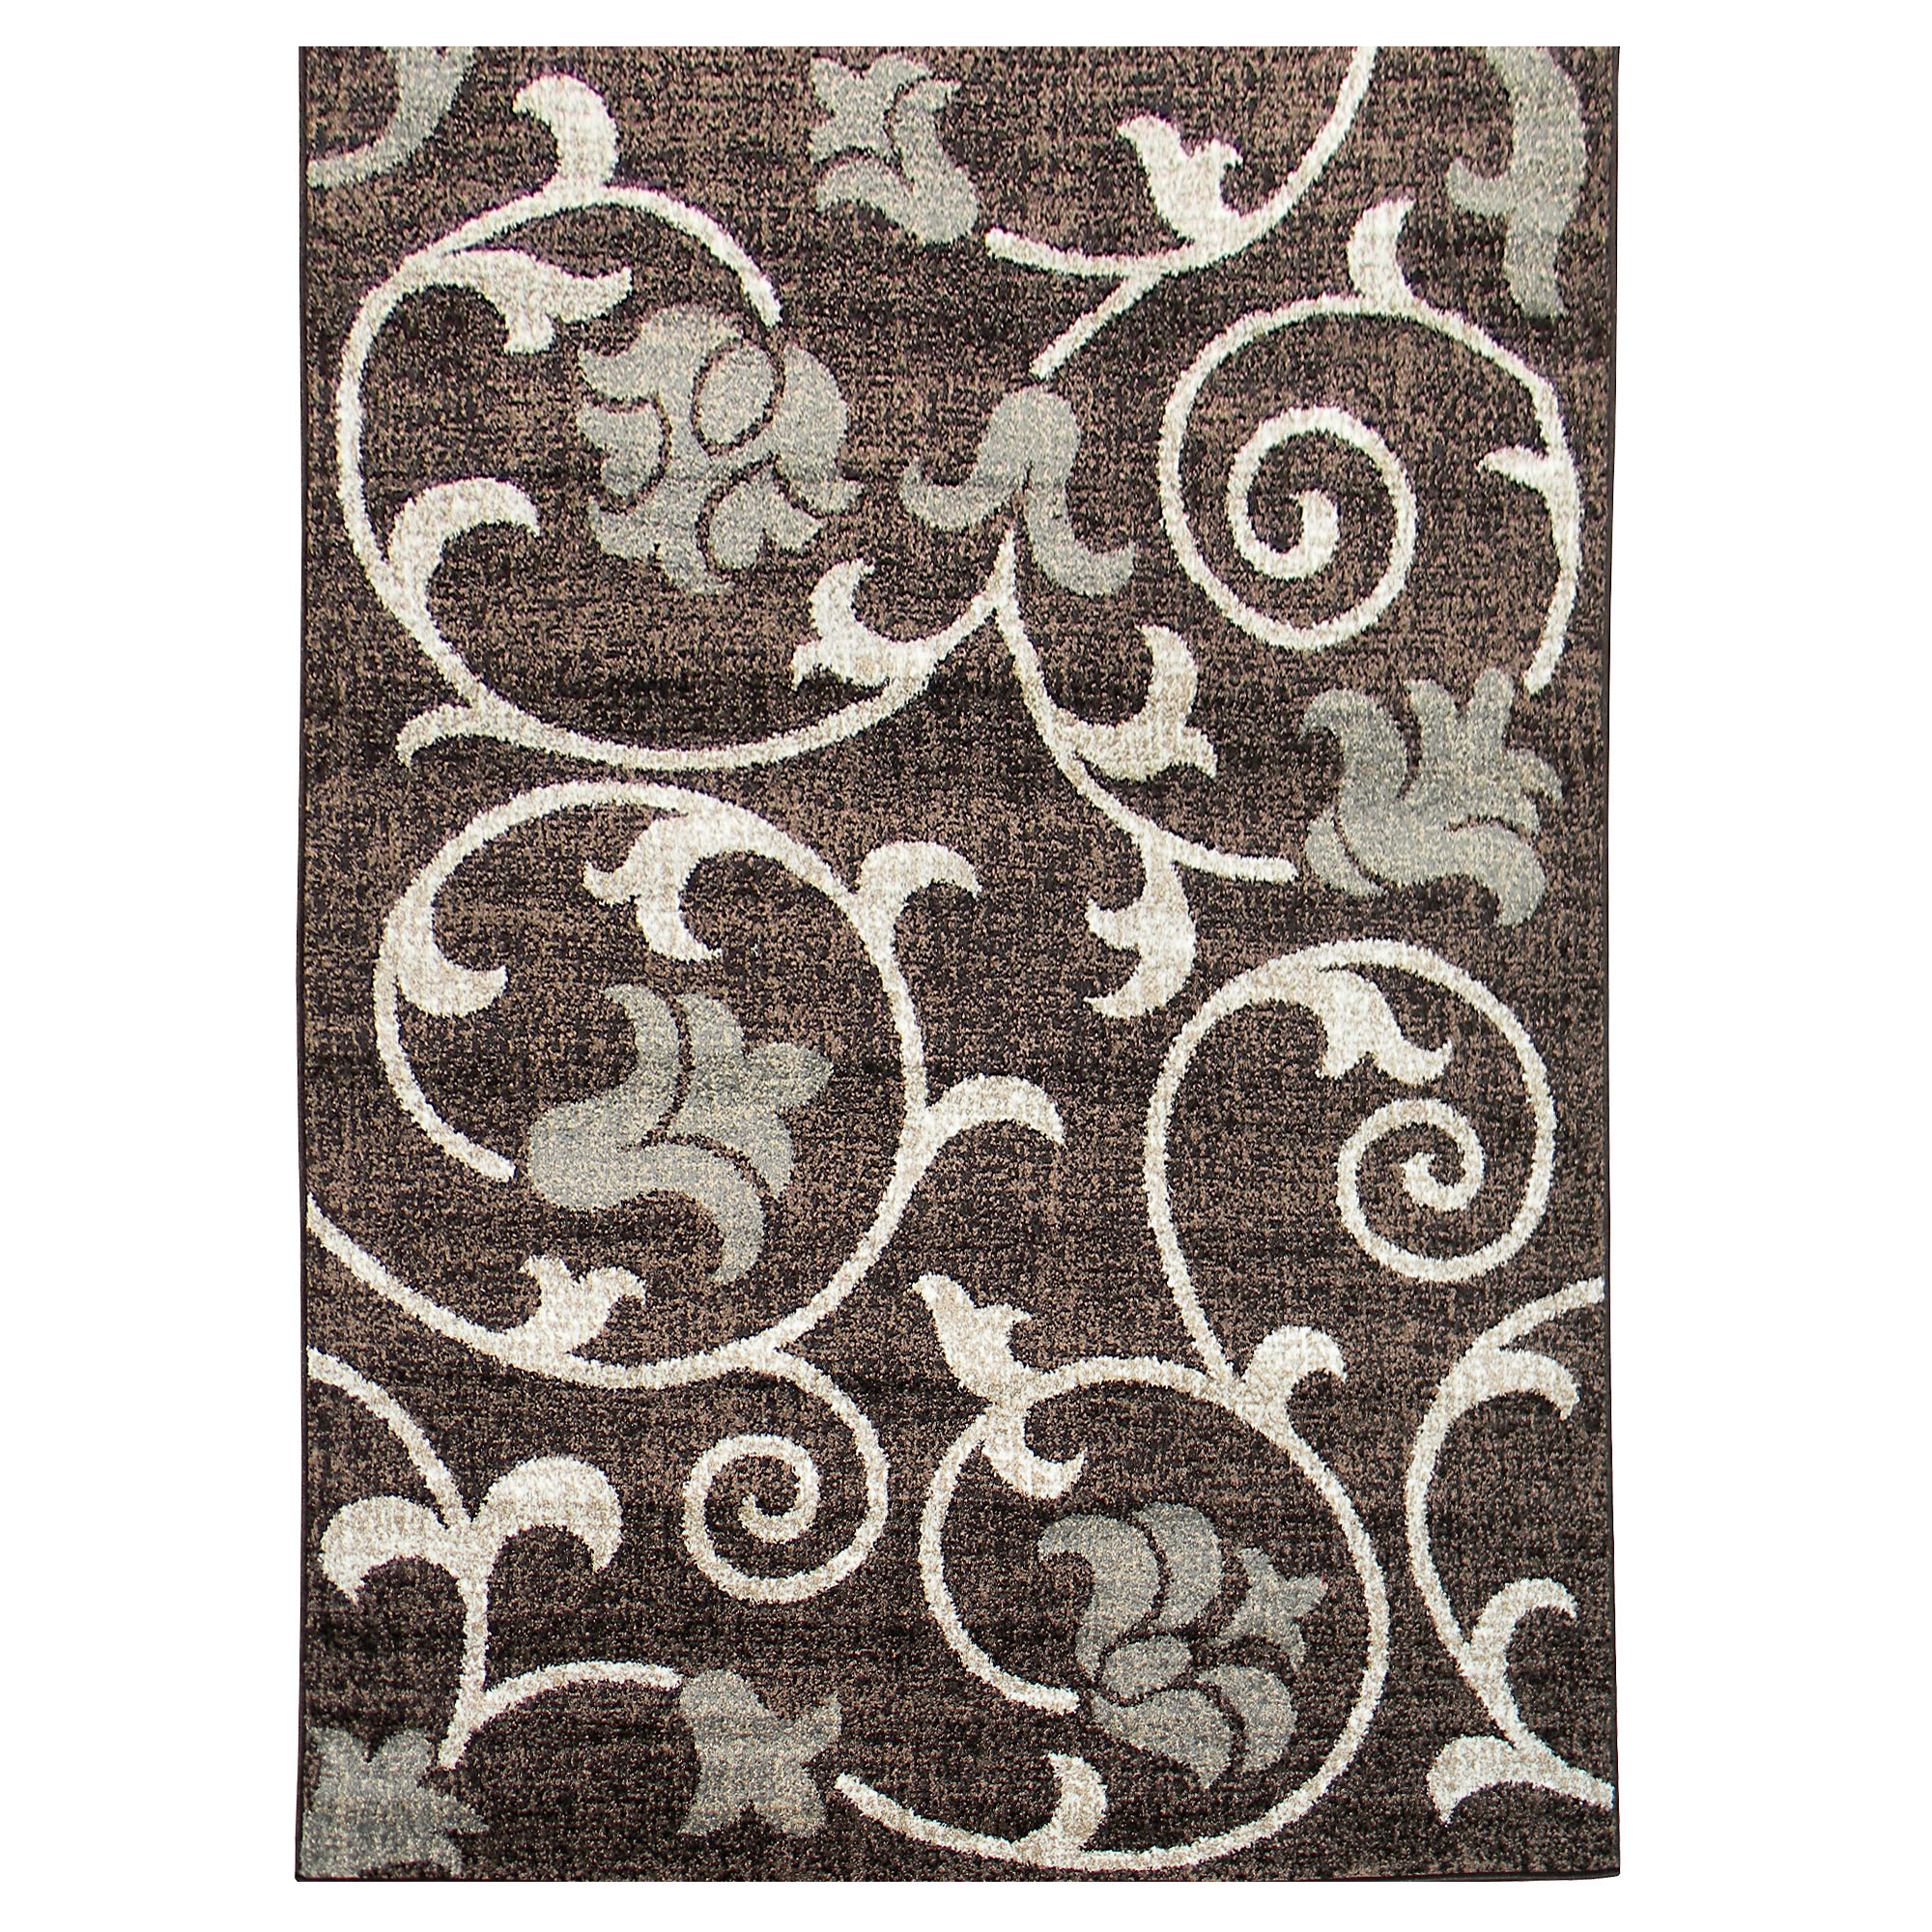 Lexington 437 floral & swirly vine design rug